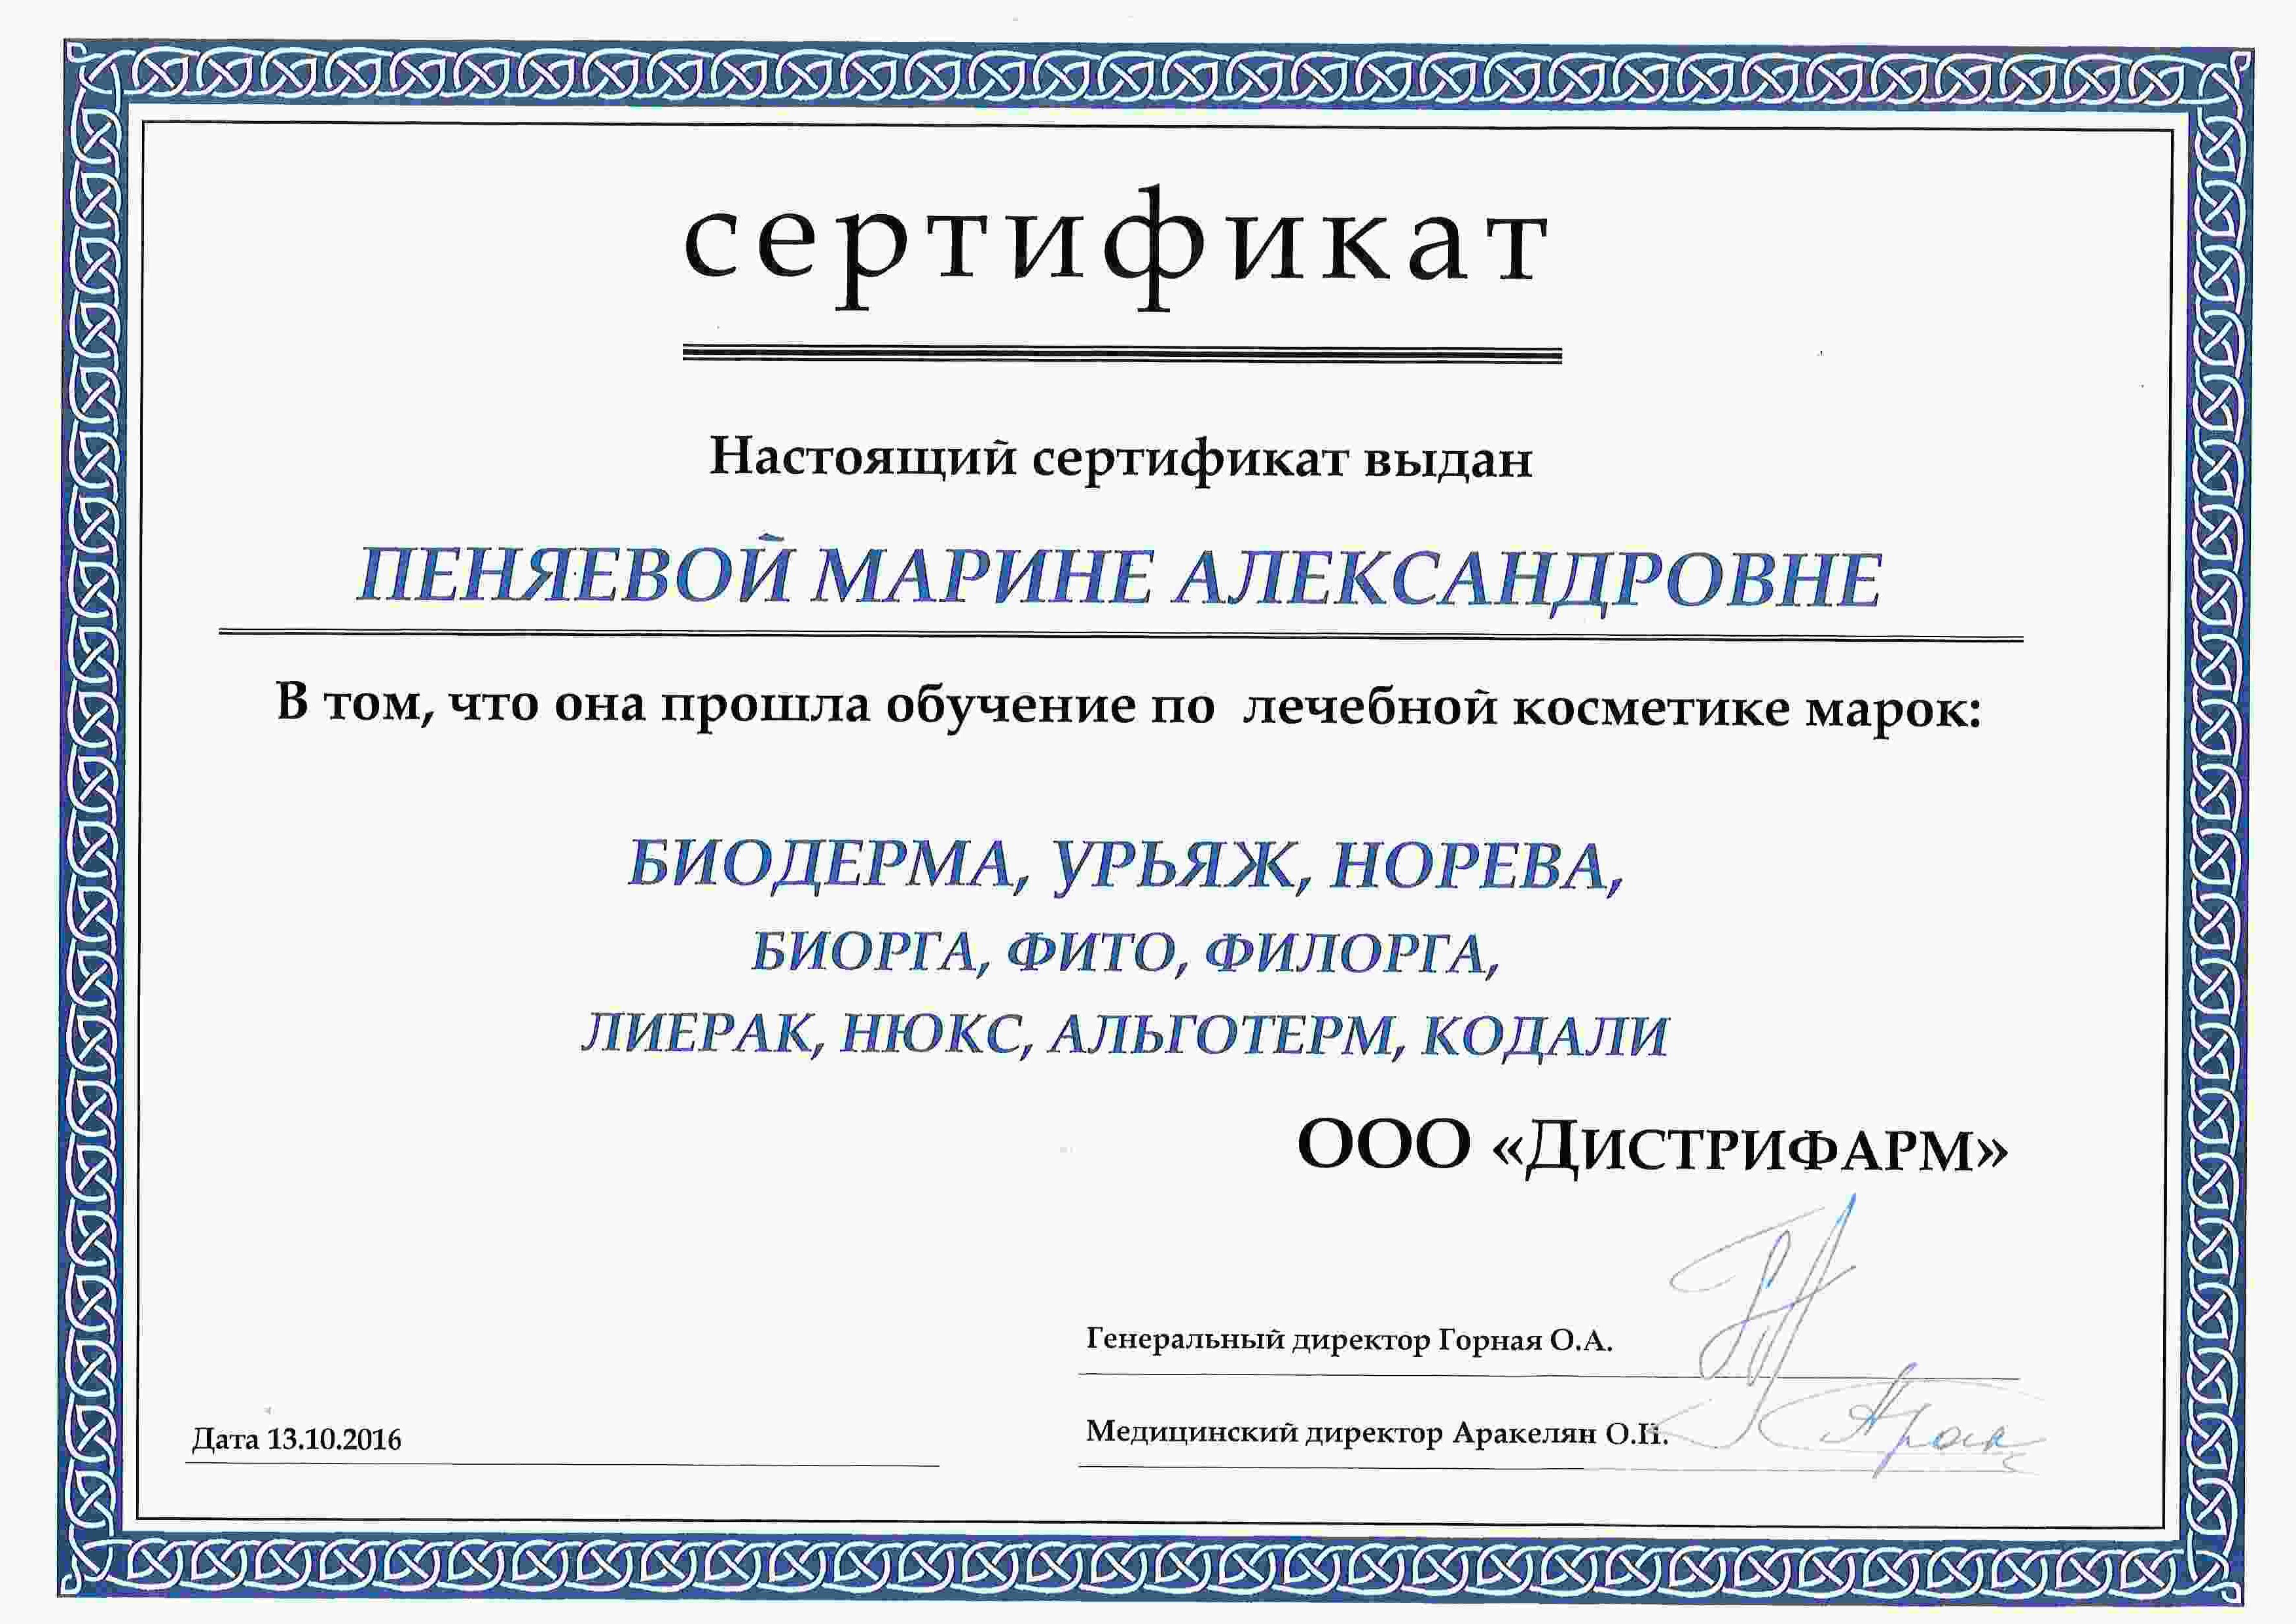 Сертификат — «Обучение по лечебной косметике». Пеняева Марина Александровна